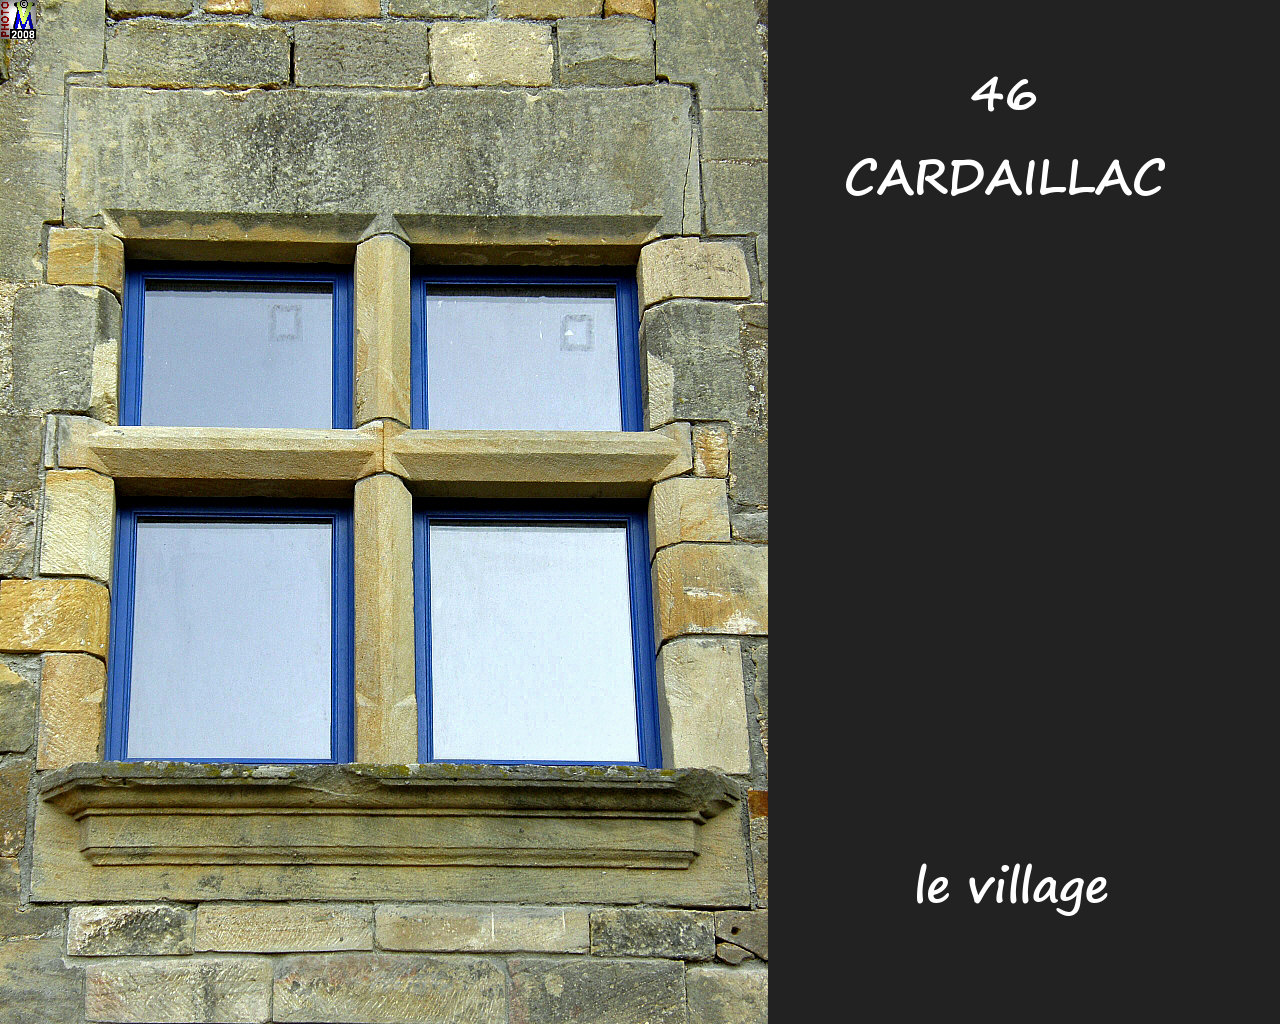 46CARDAILLAC_village_116.jpg